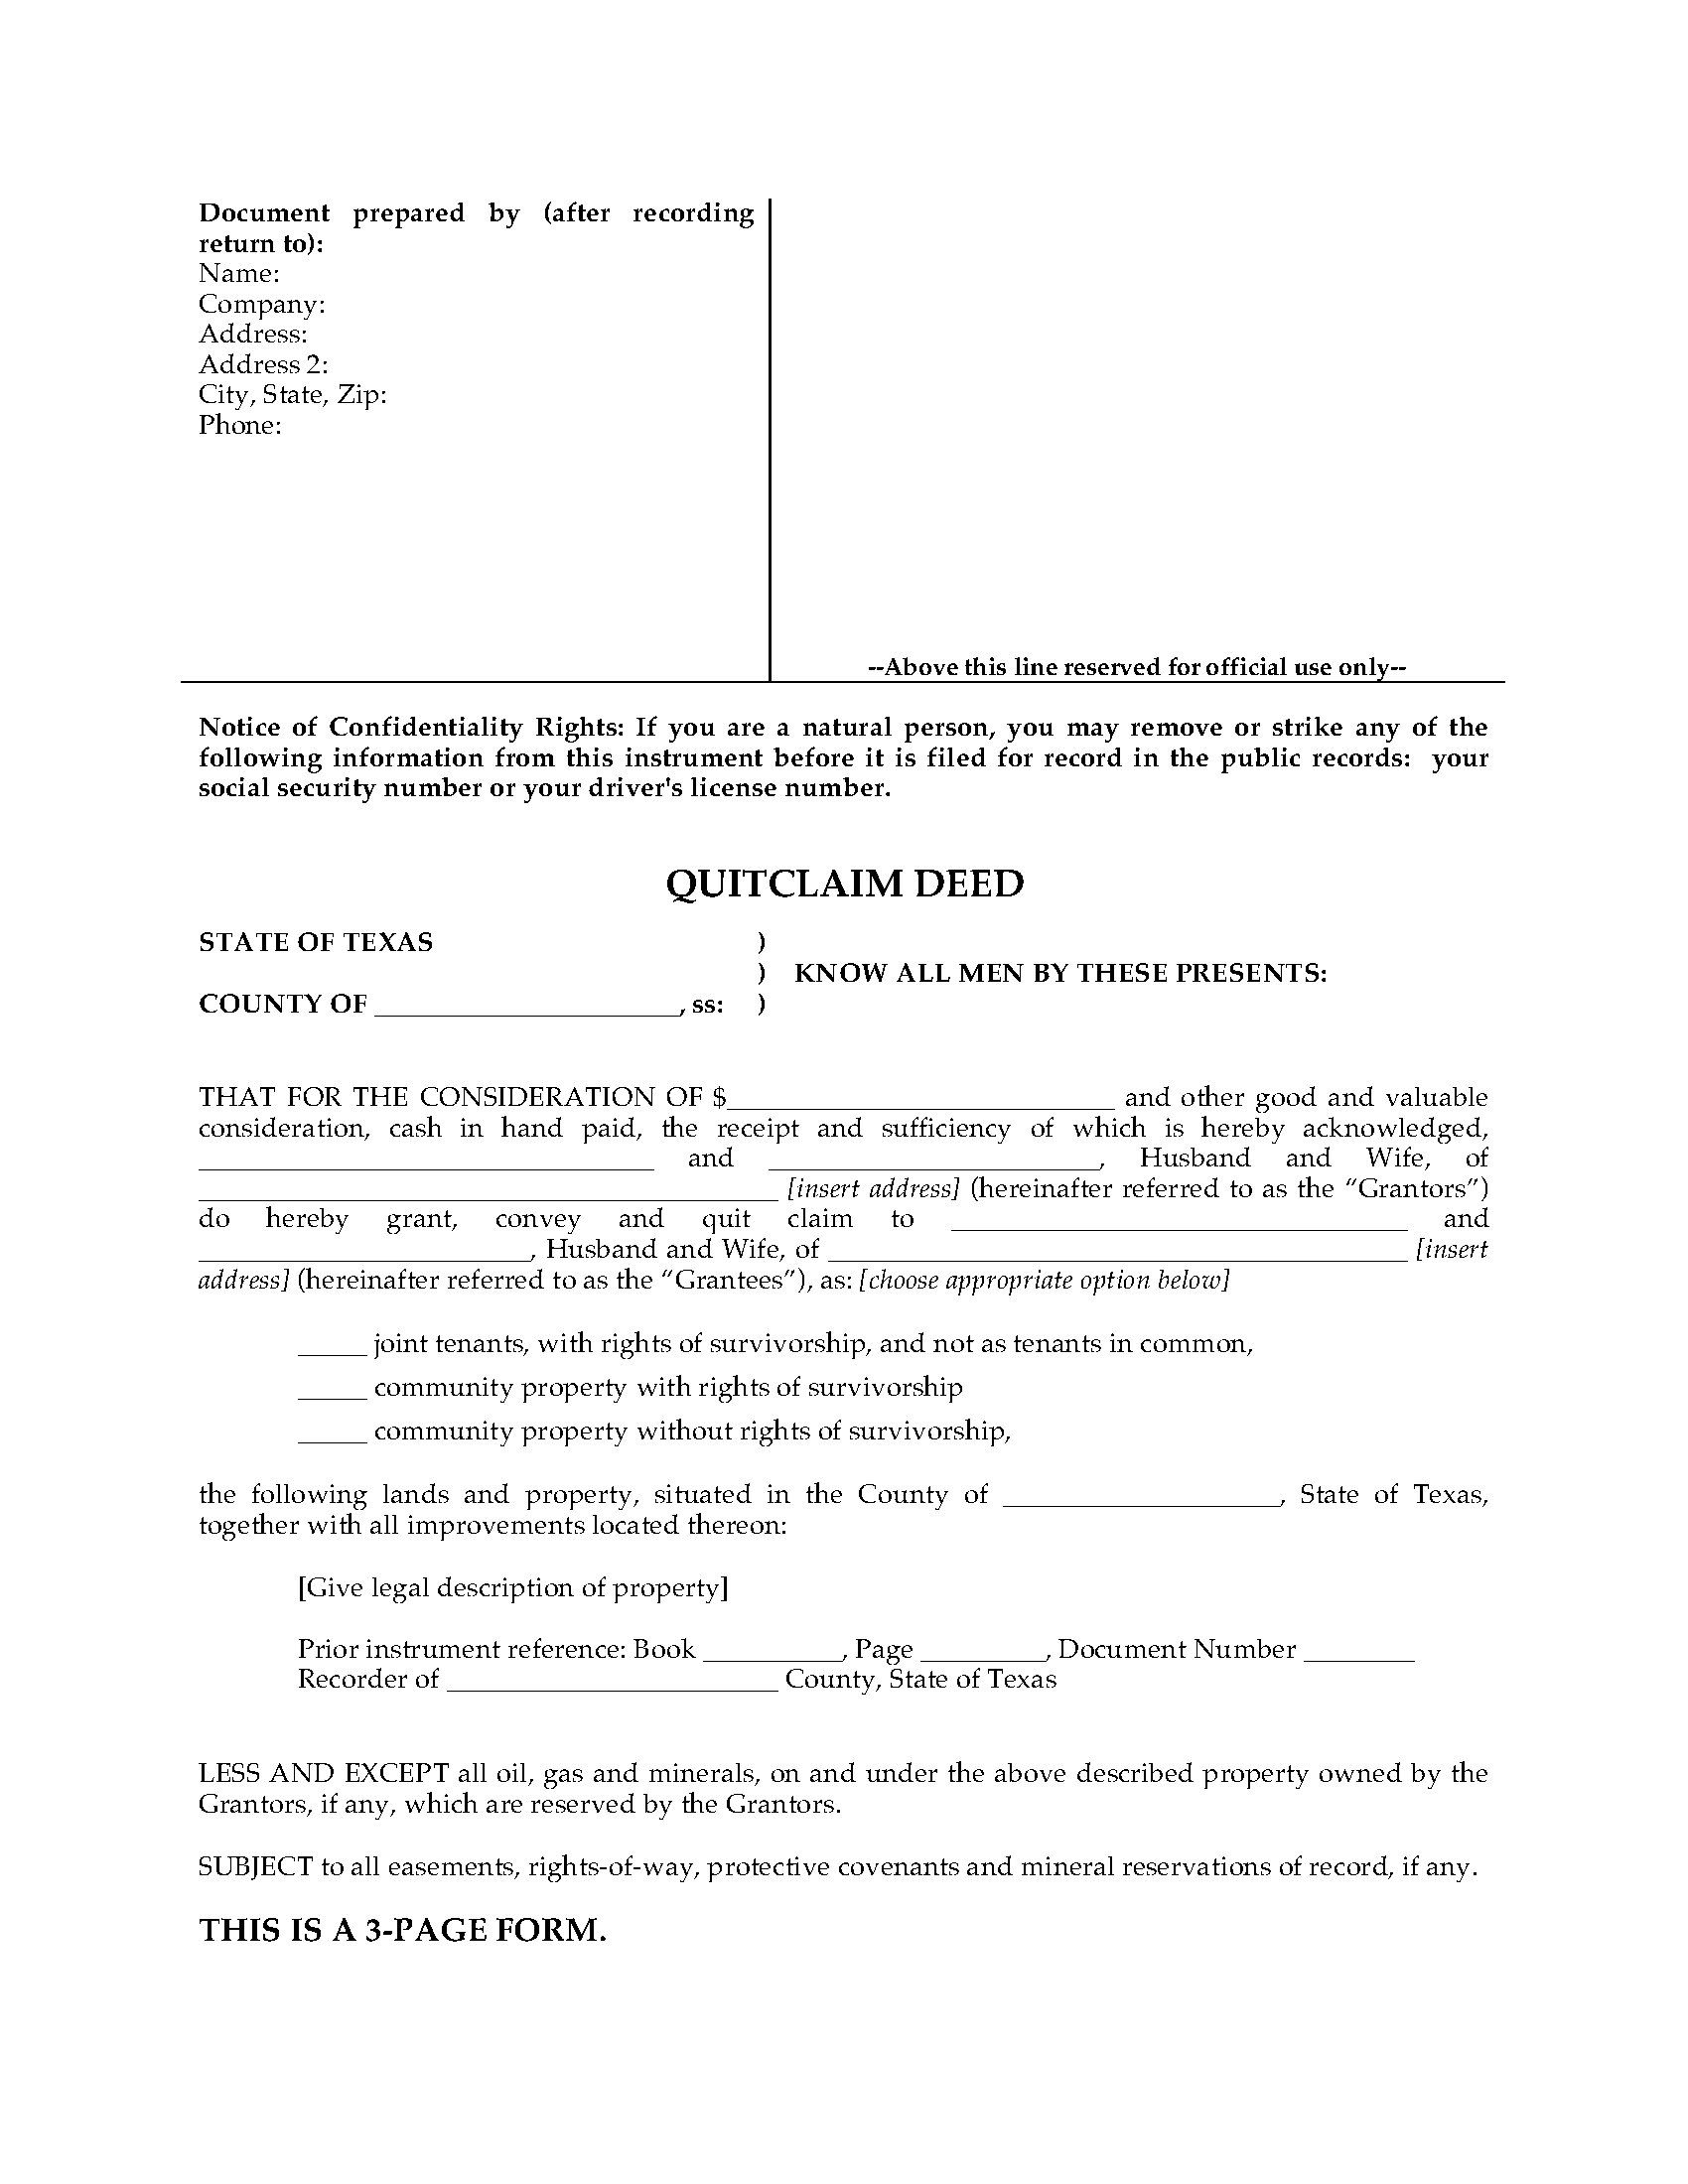 texas-quitclaim-deed-form-download-printable-pdf-templateroller-vrogue